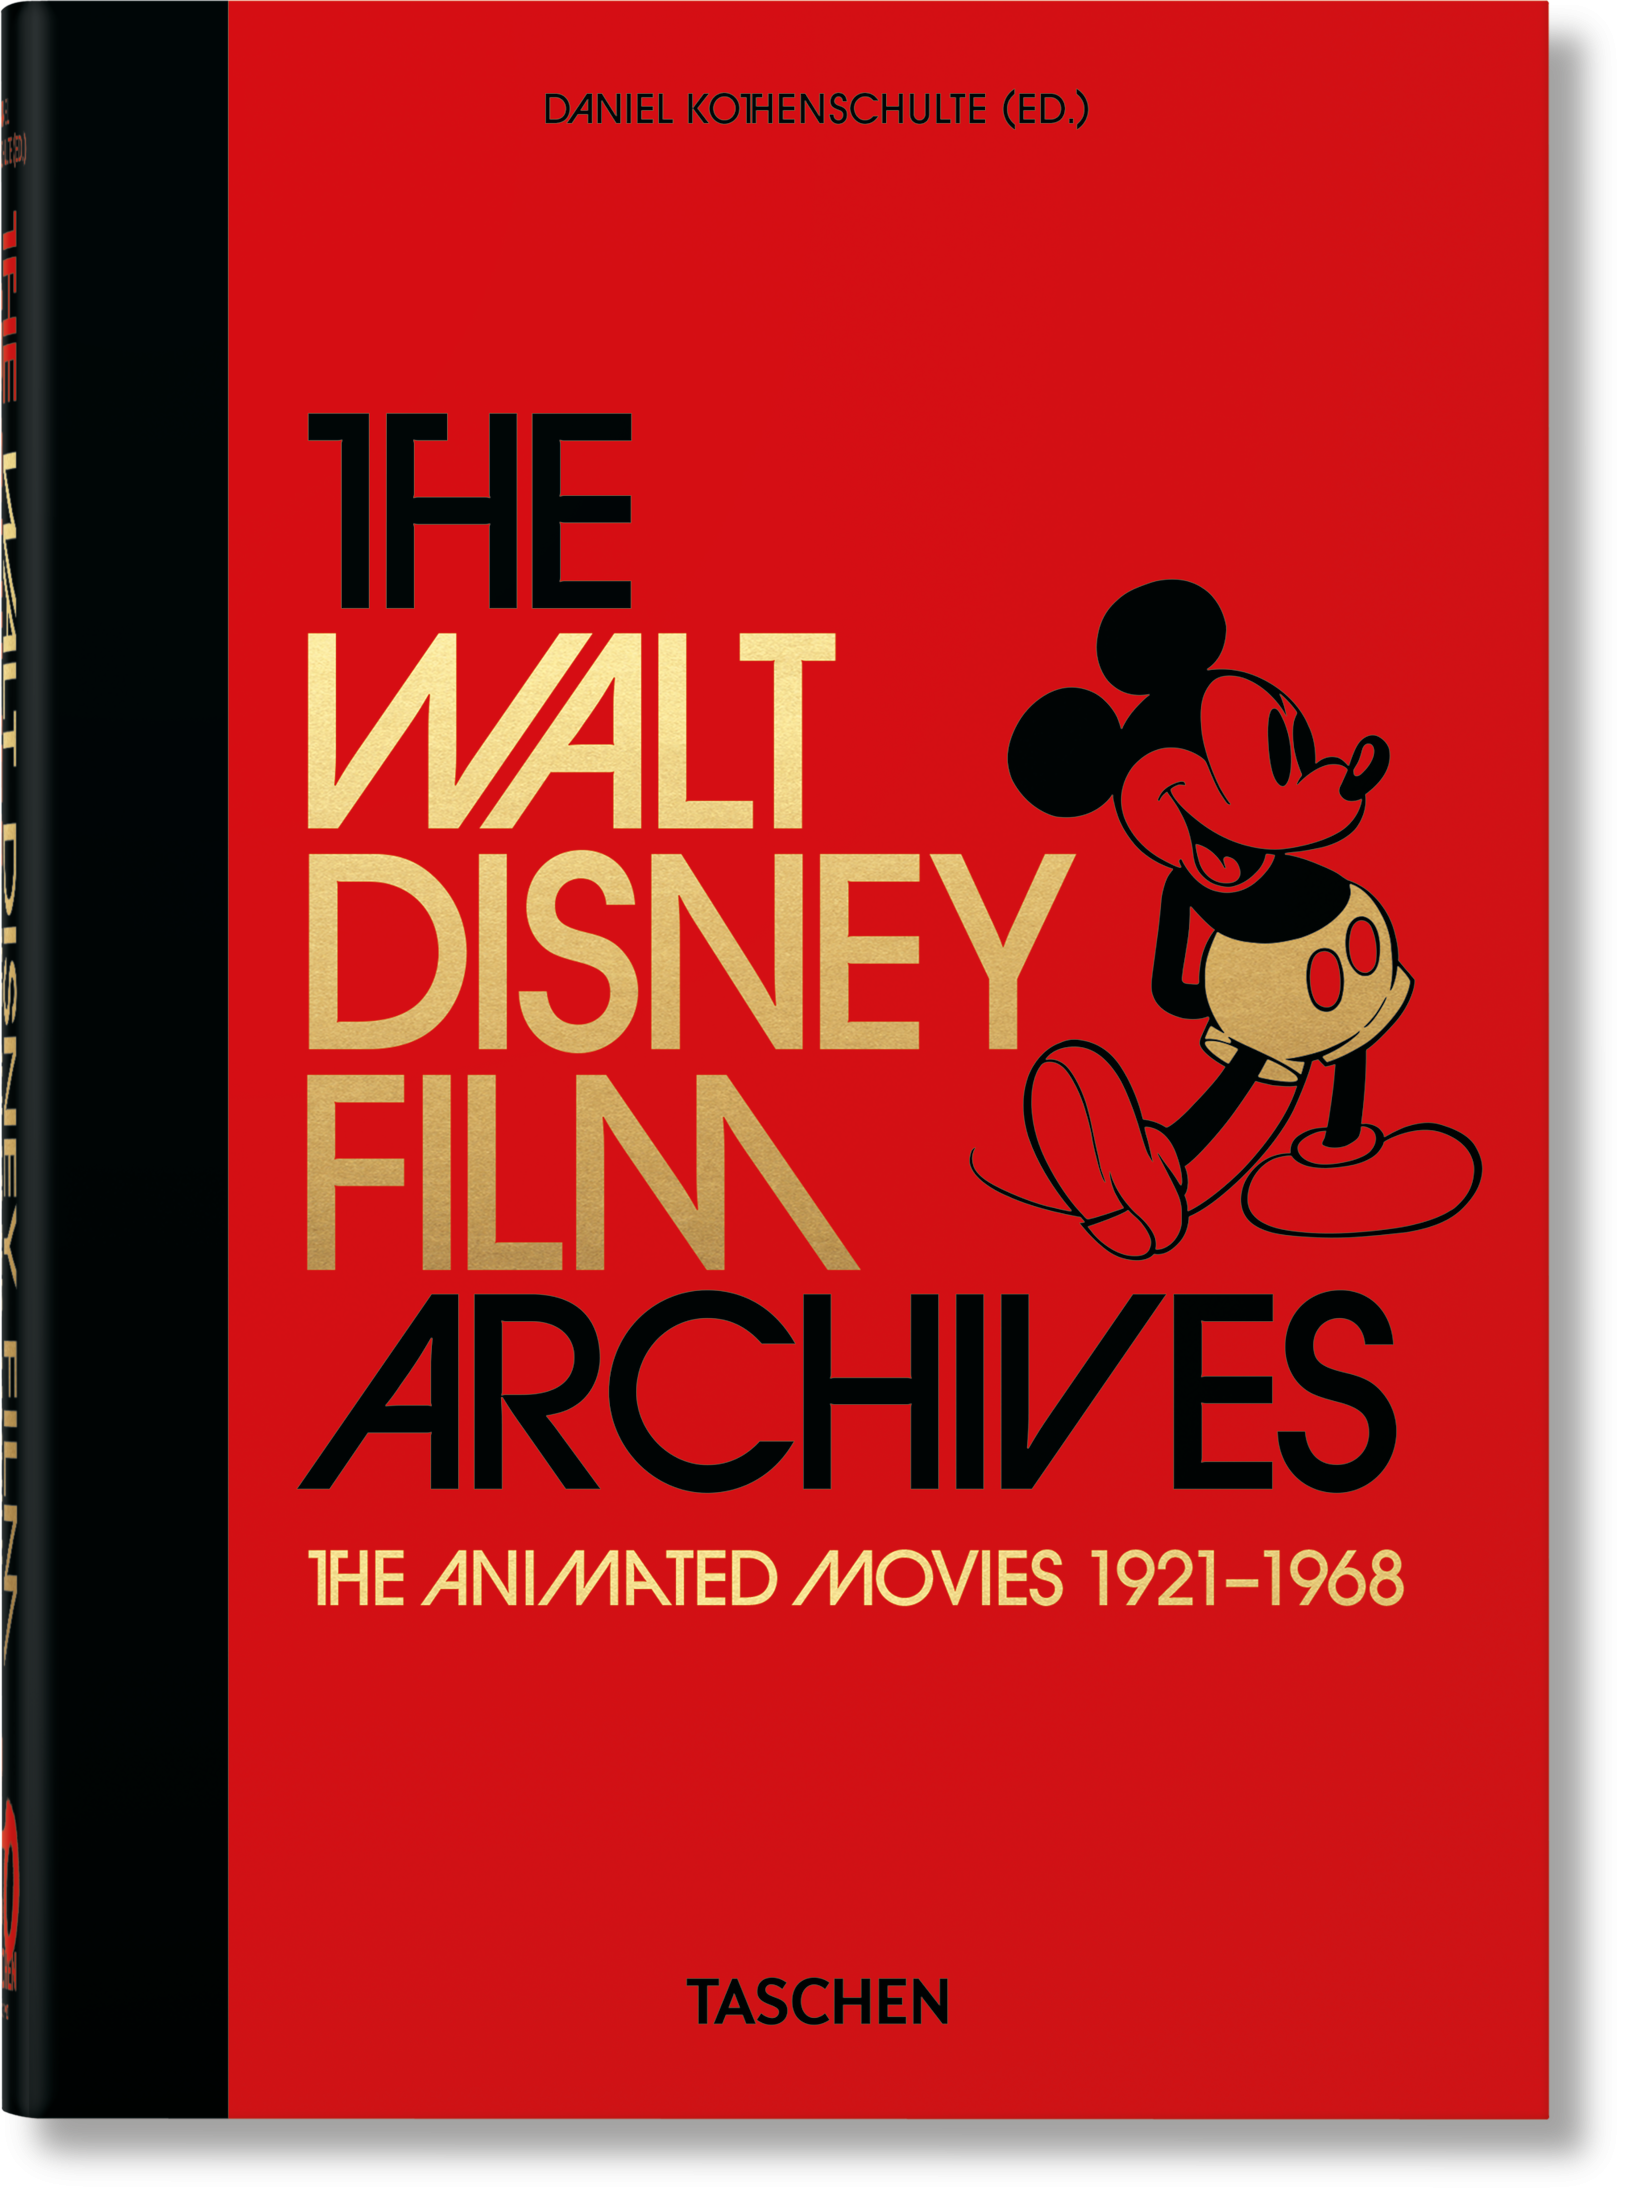 TASCHEN Books: The Walt Disney Film Archives. 40th Anniversary Ed.